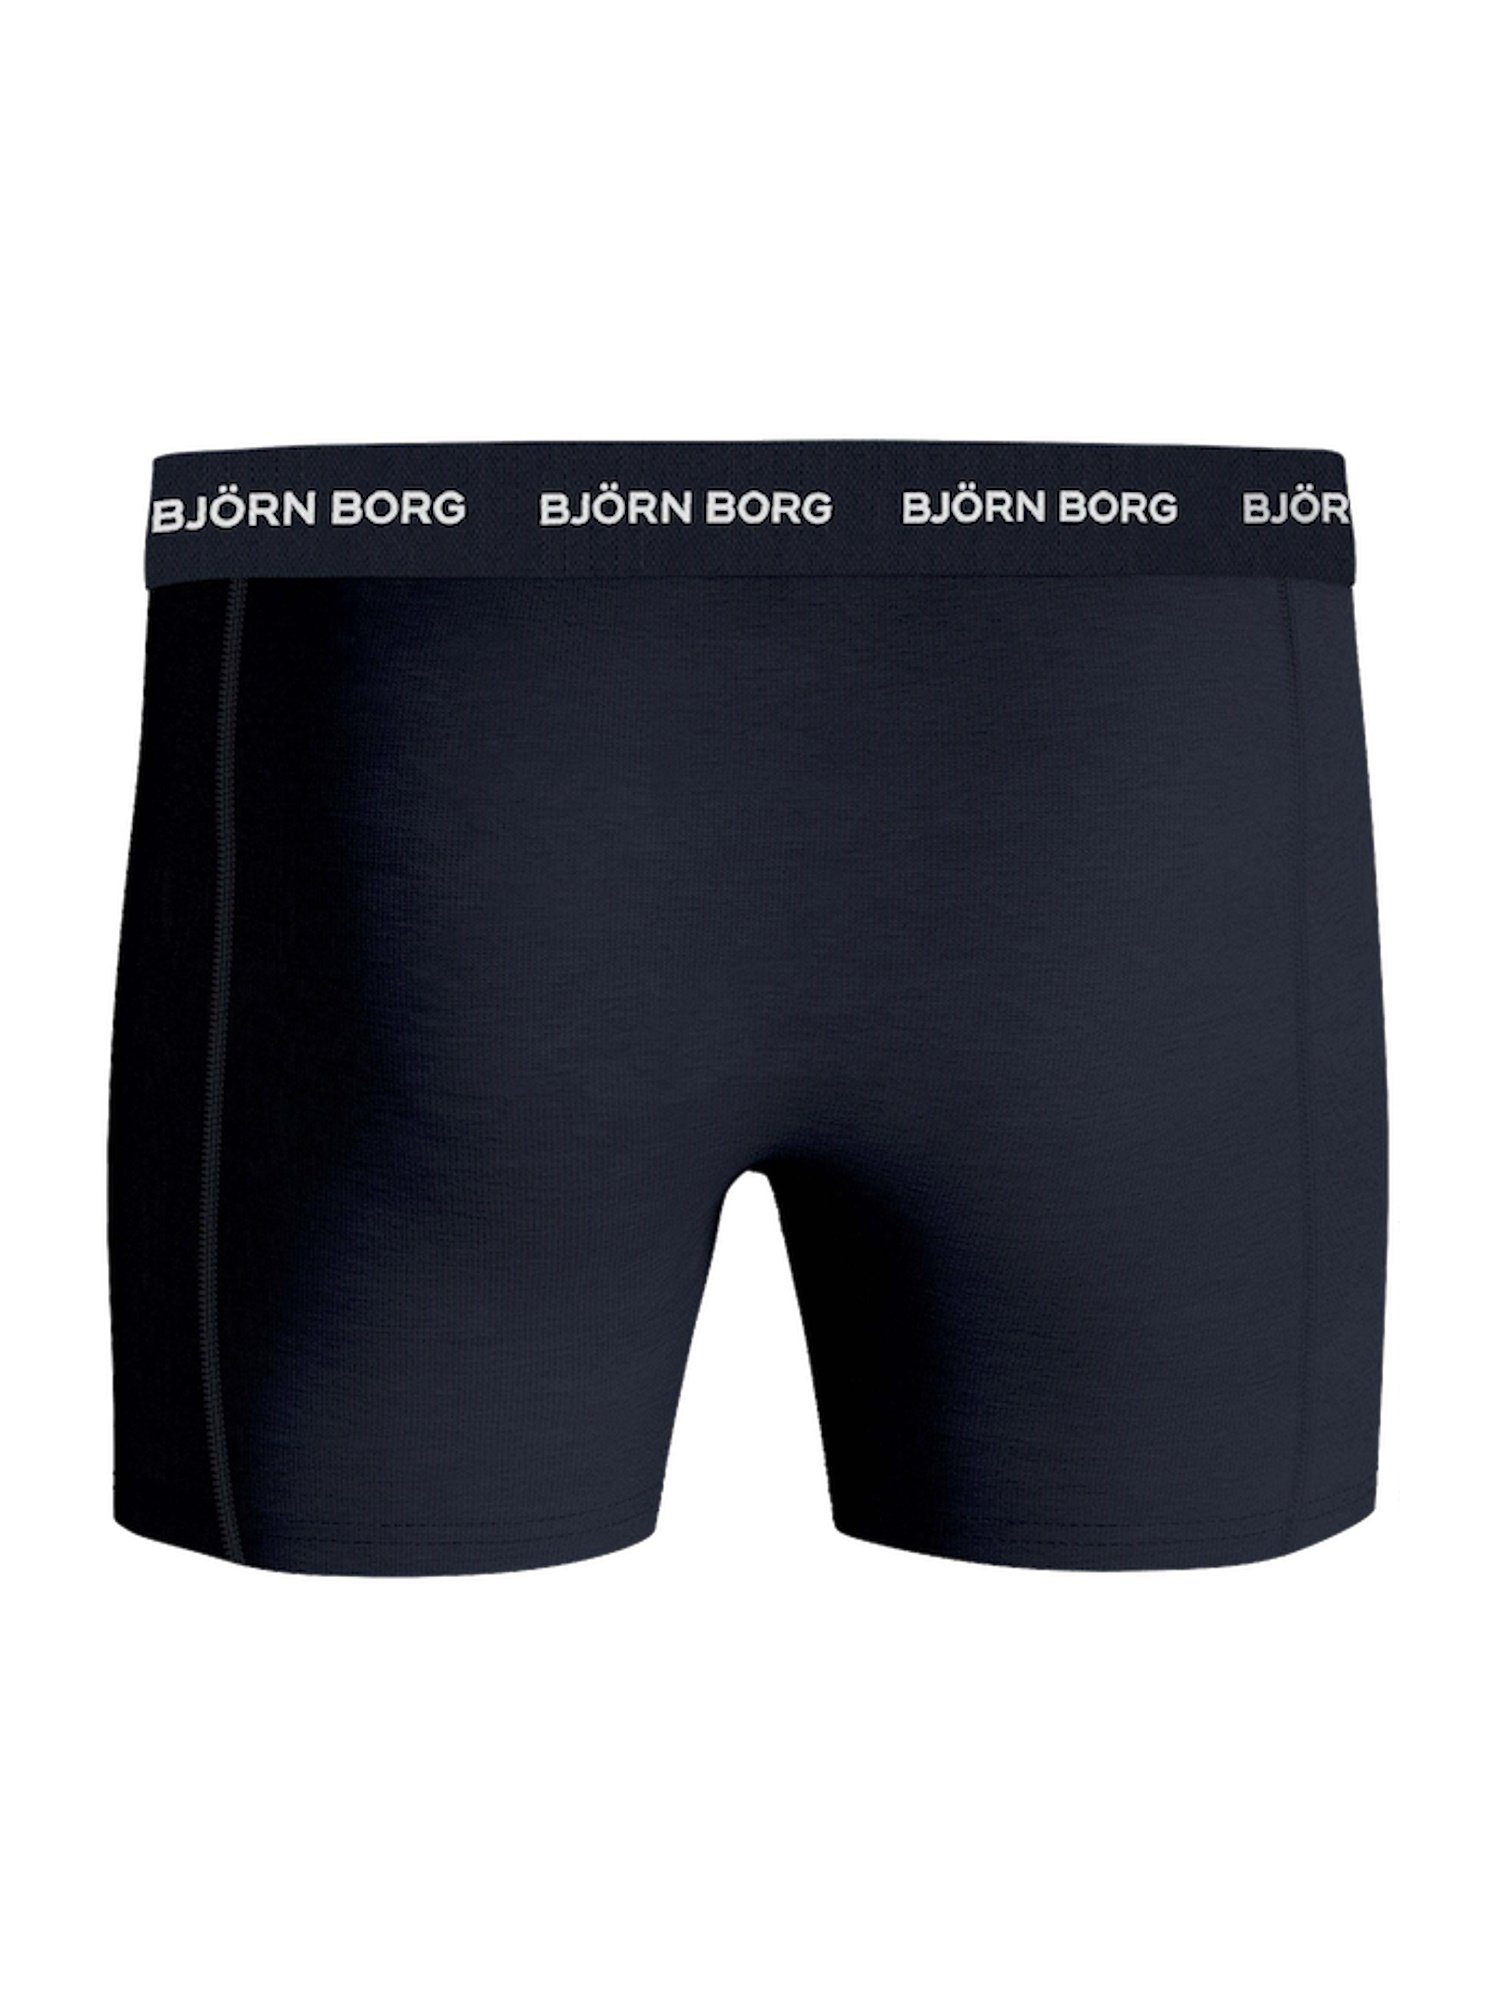 Björn Borg Shorts blau/camouflage SHADELINE Boxershorts Pack SHORTS ESSENTIAL Boxer 3